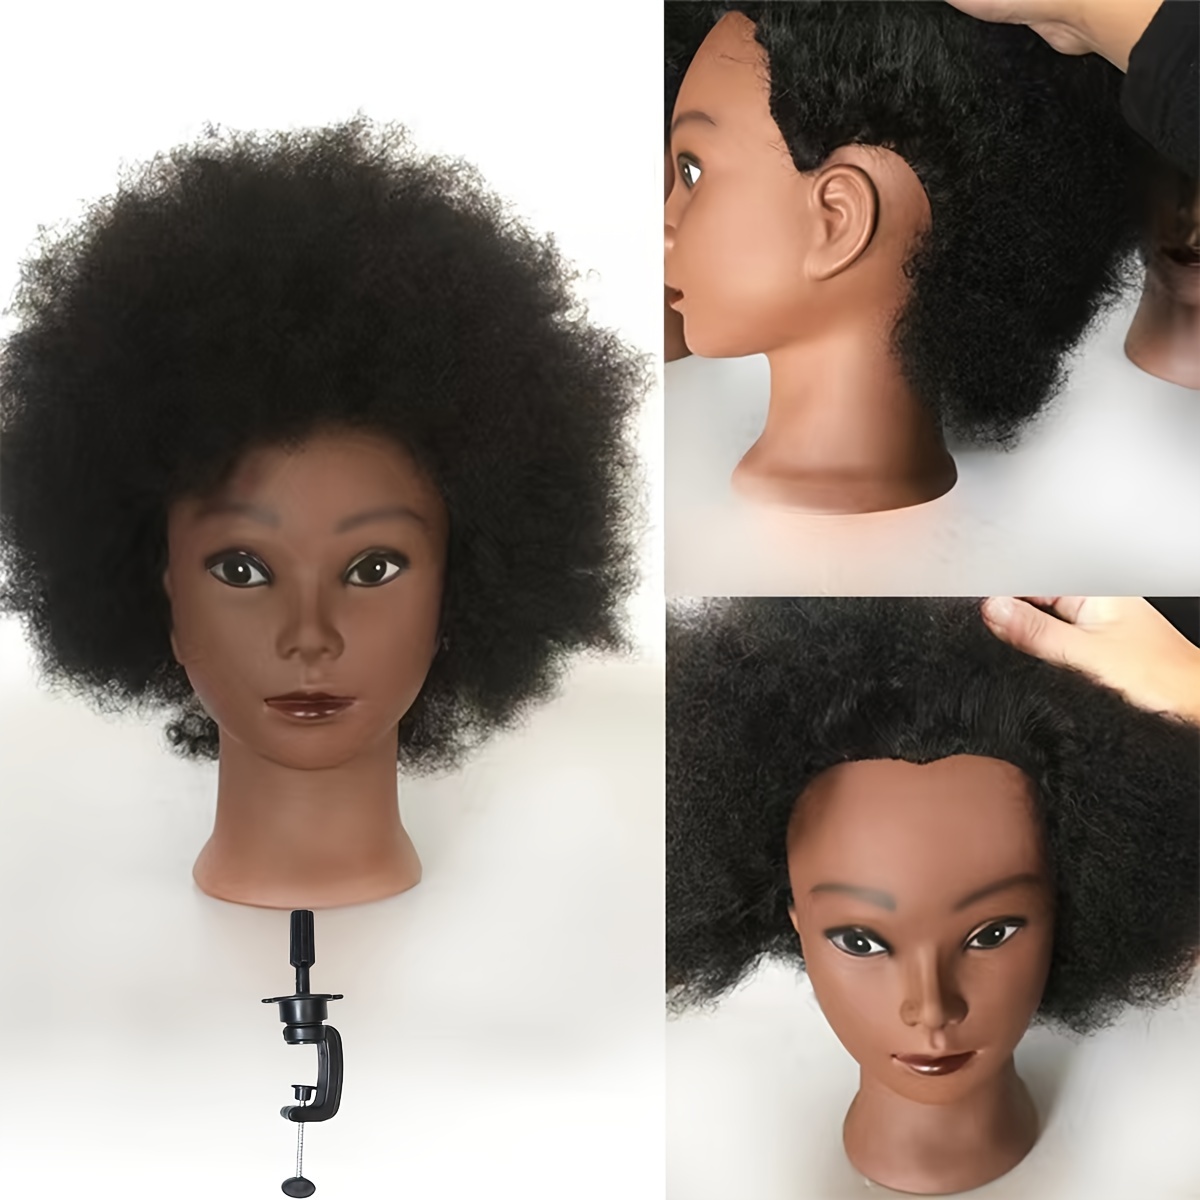 Afro Human Hair Mannequin Head Training